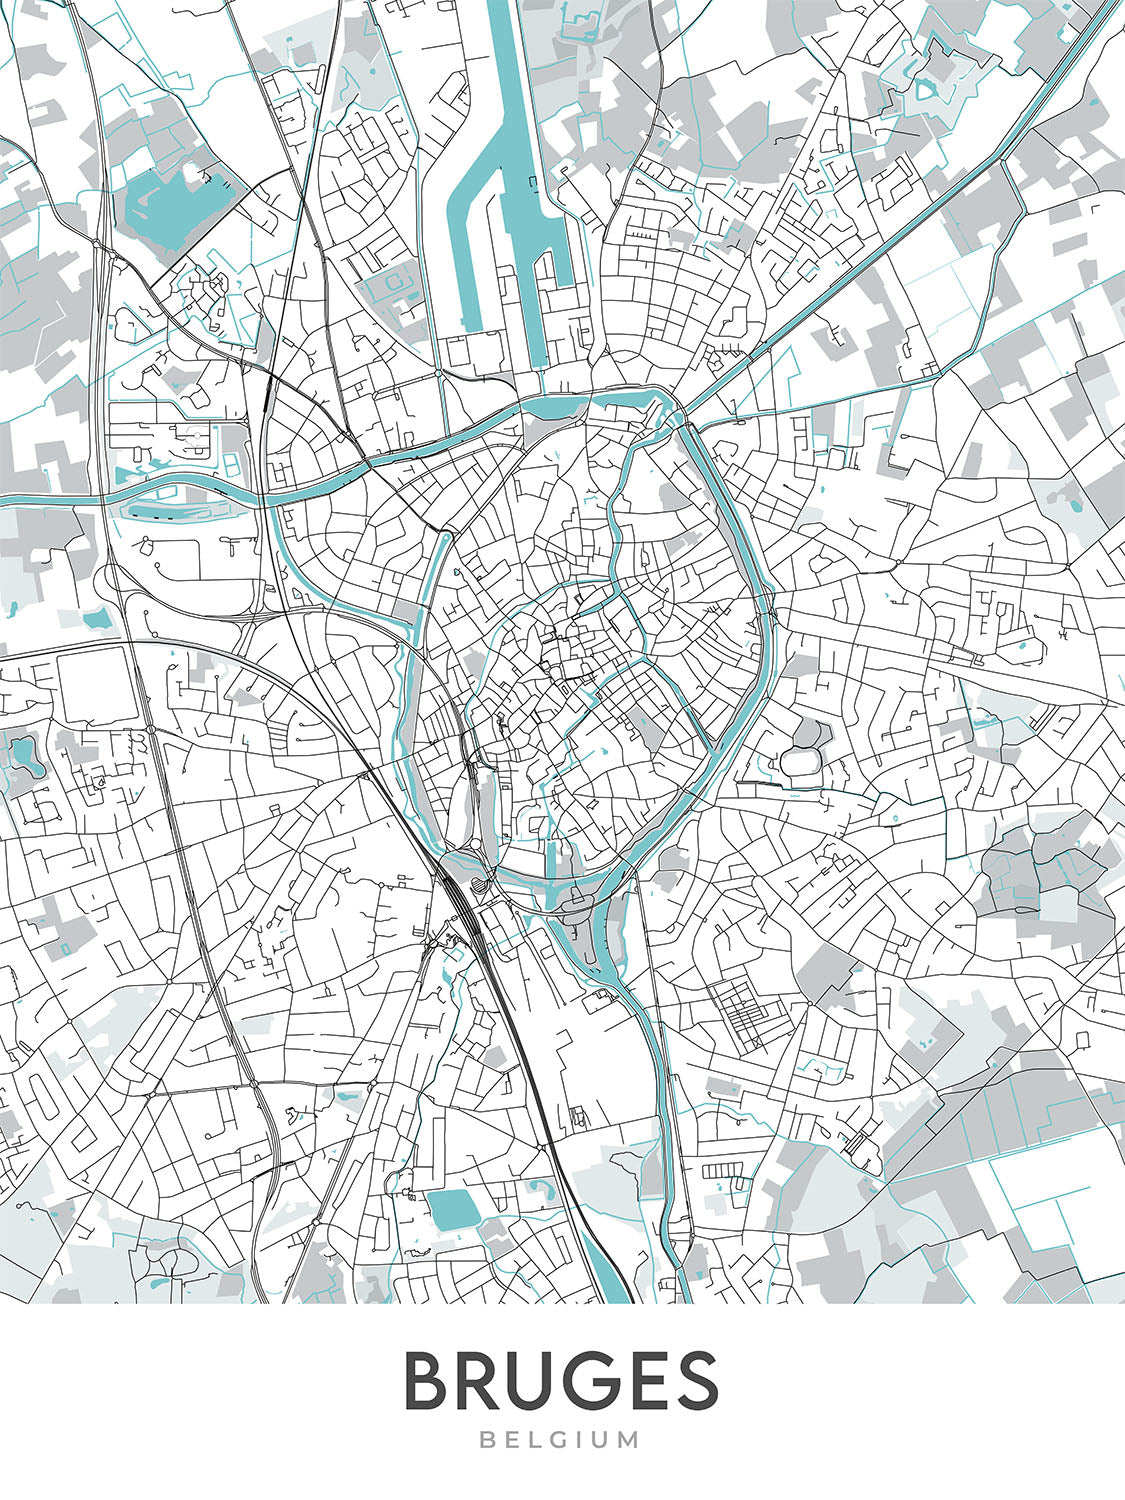 Modern City Map of Bruges, Belgium: Belfry, Basilica, Markt, Minnewater, Groeningemuseum